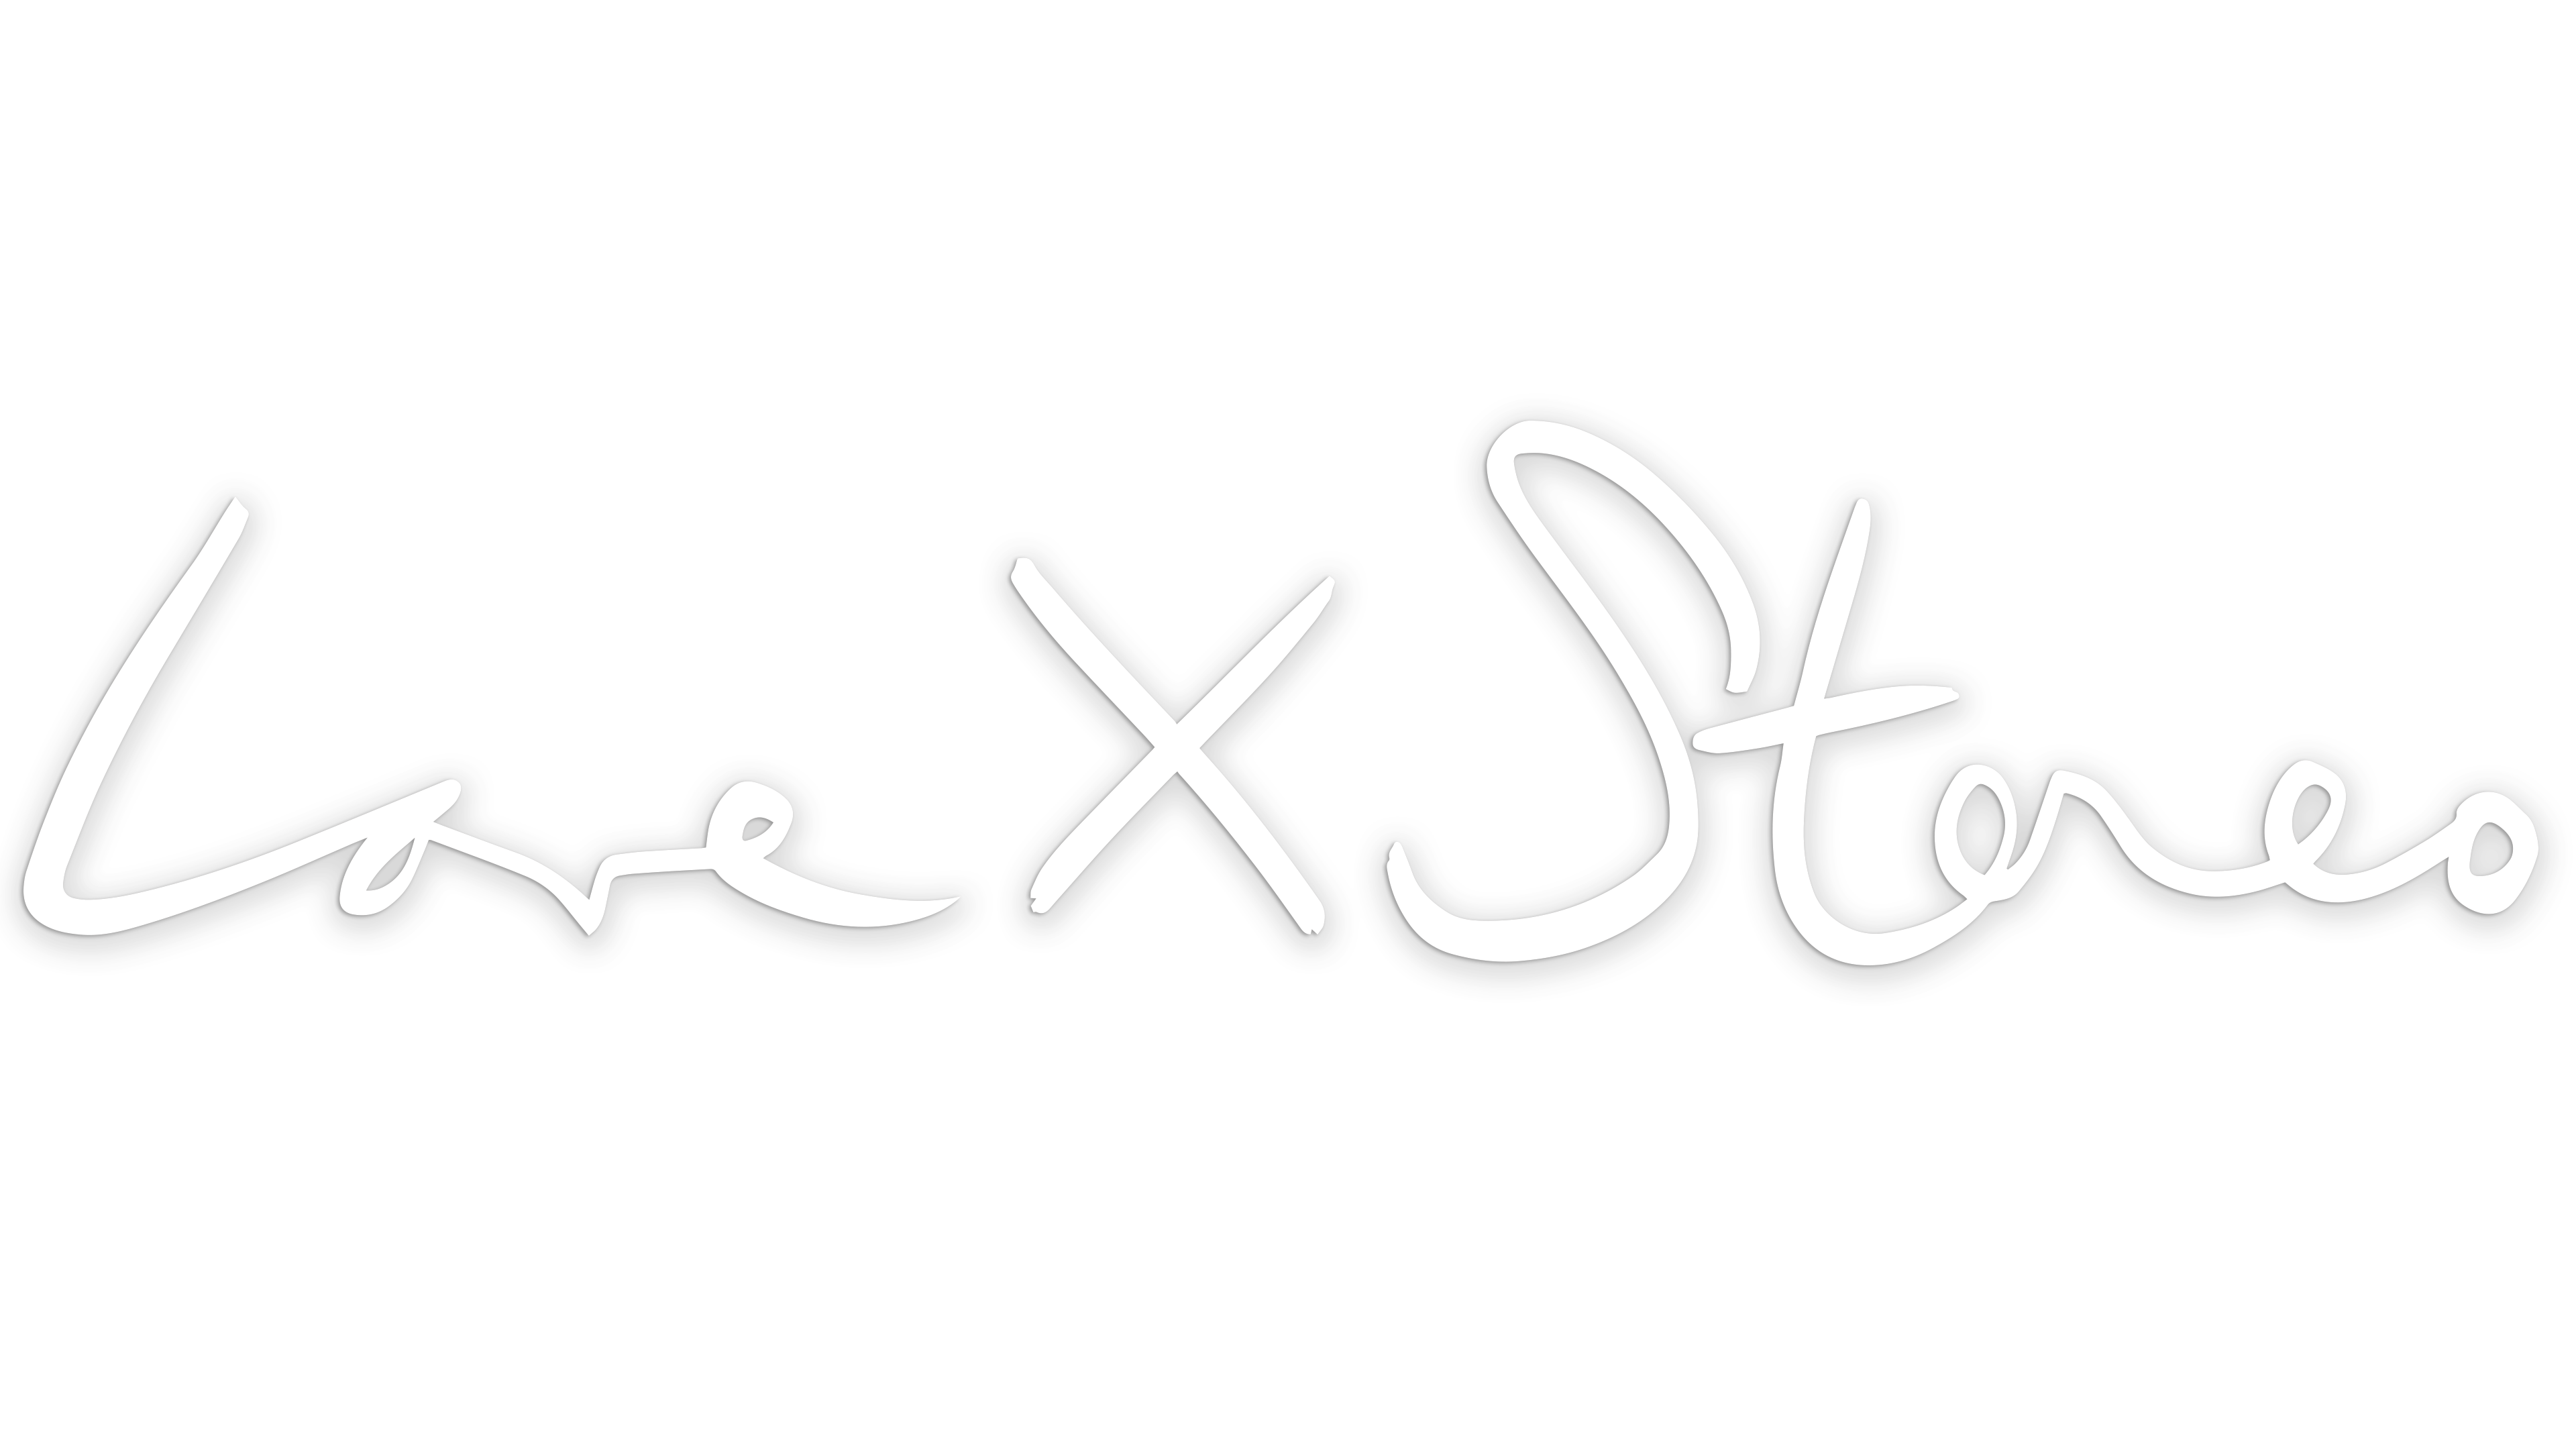 LOVE X STEREO